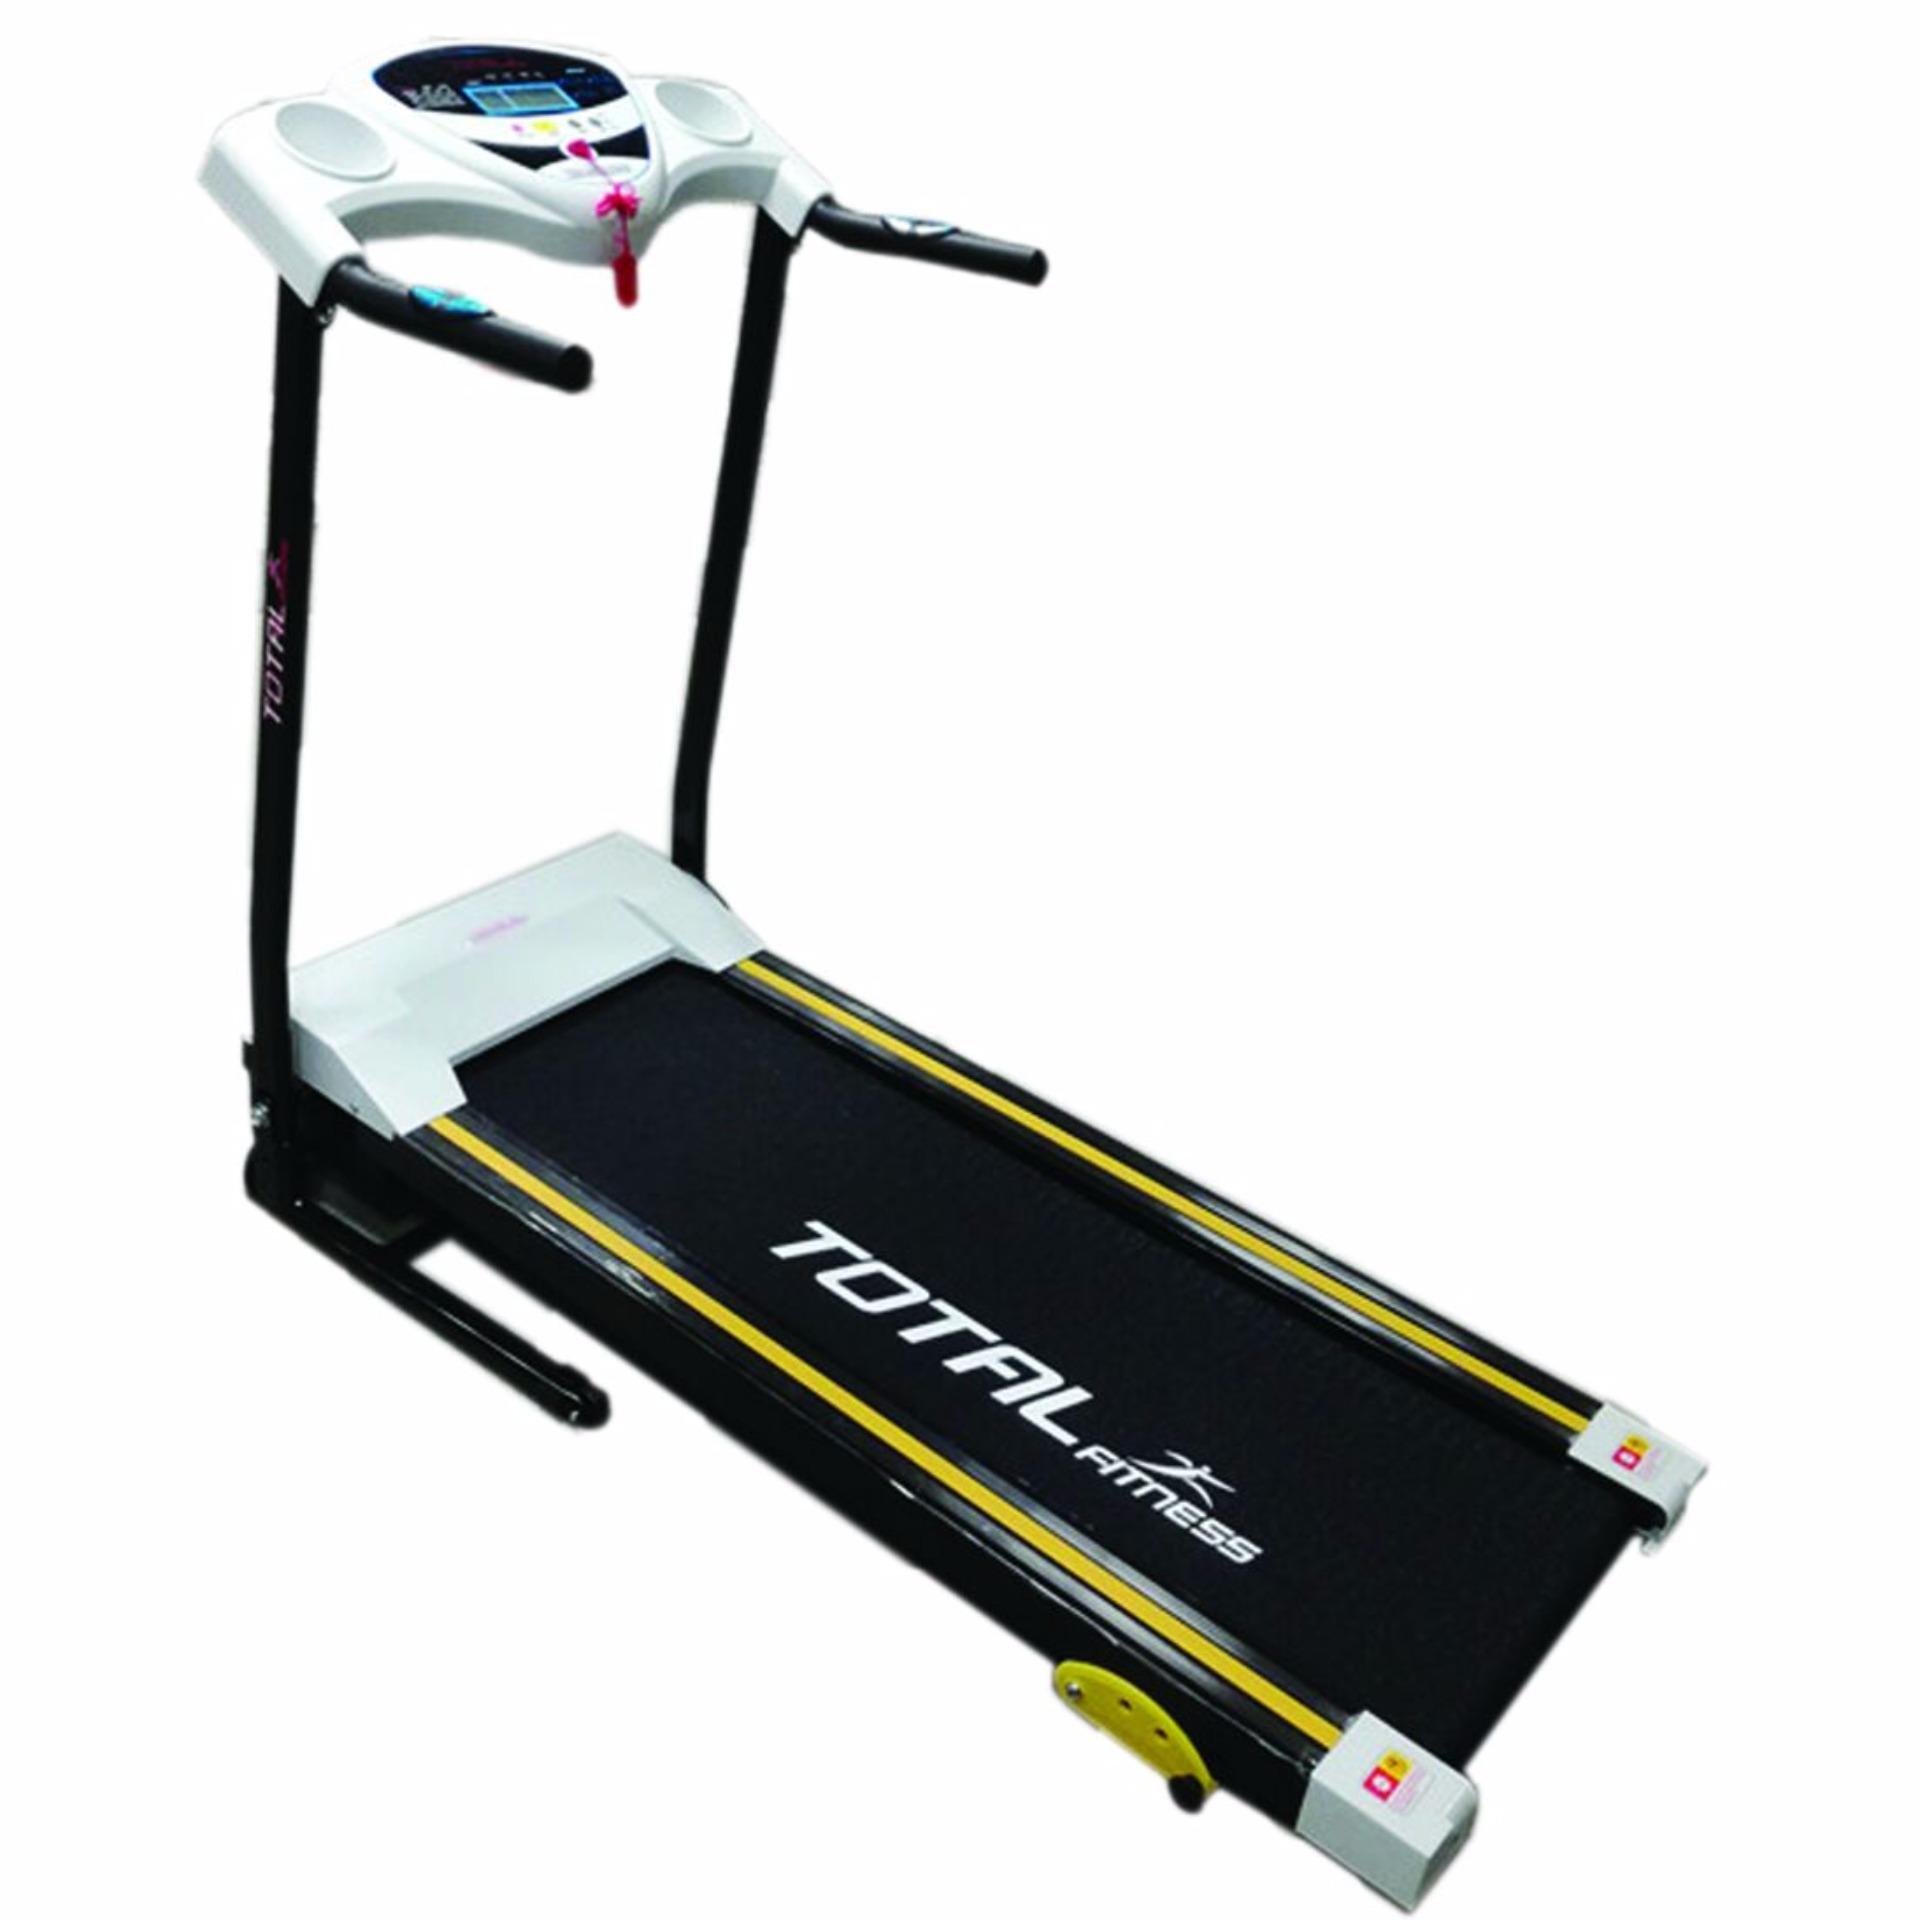 Total Fitness - Treadmill Elektrik TL-626 1 Fungsi PUTIH - Alat fitness - Alat Olahraga - Gym - Kesehatan